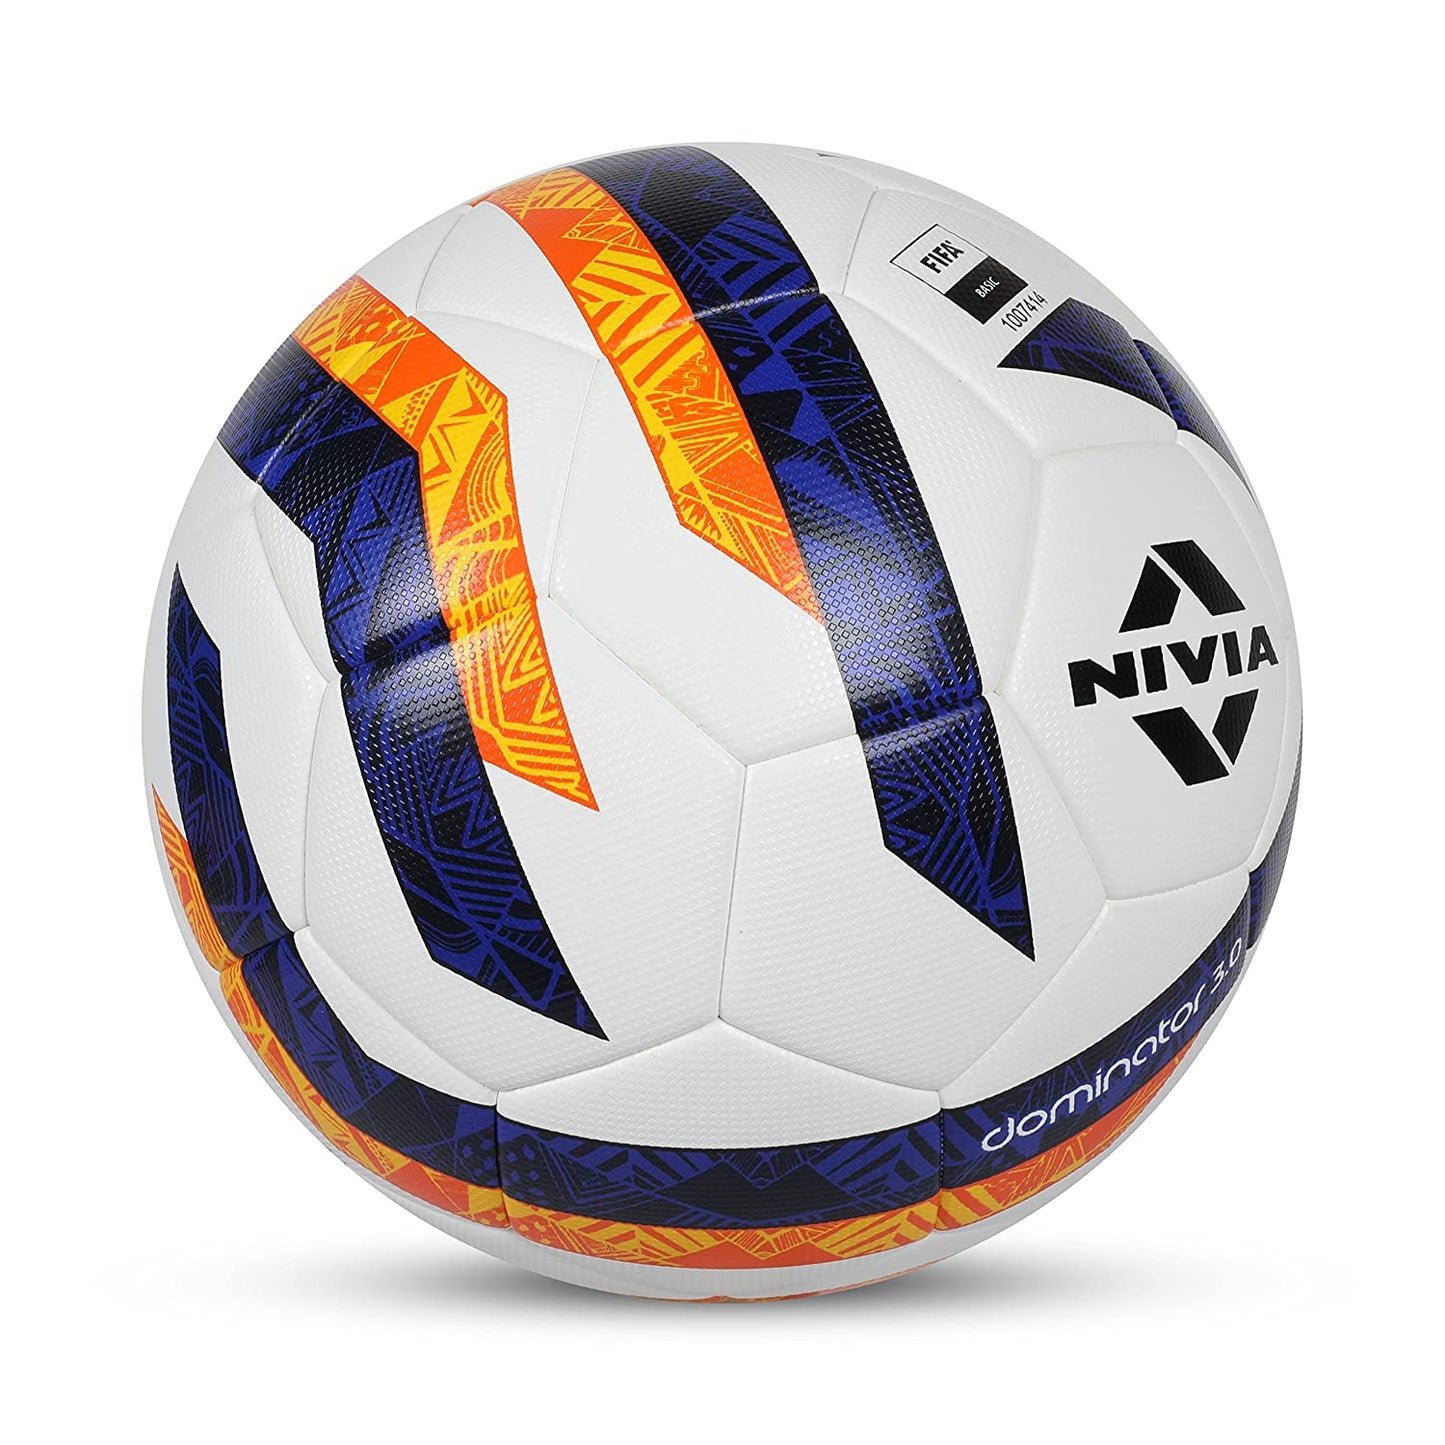 Nivia Dominator 3.0 Football - Size 5 - Best Price online Prokicksports.com